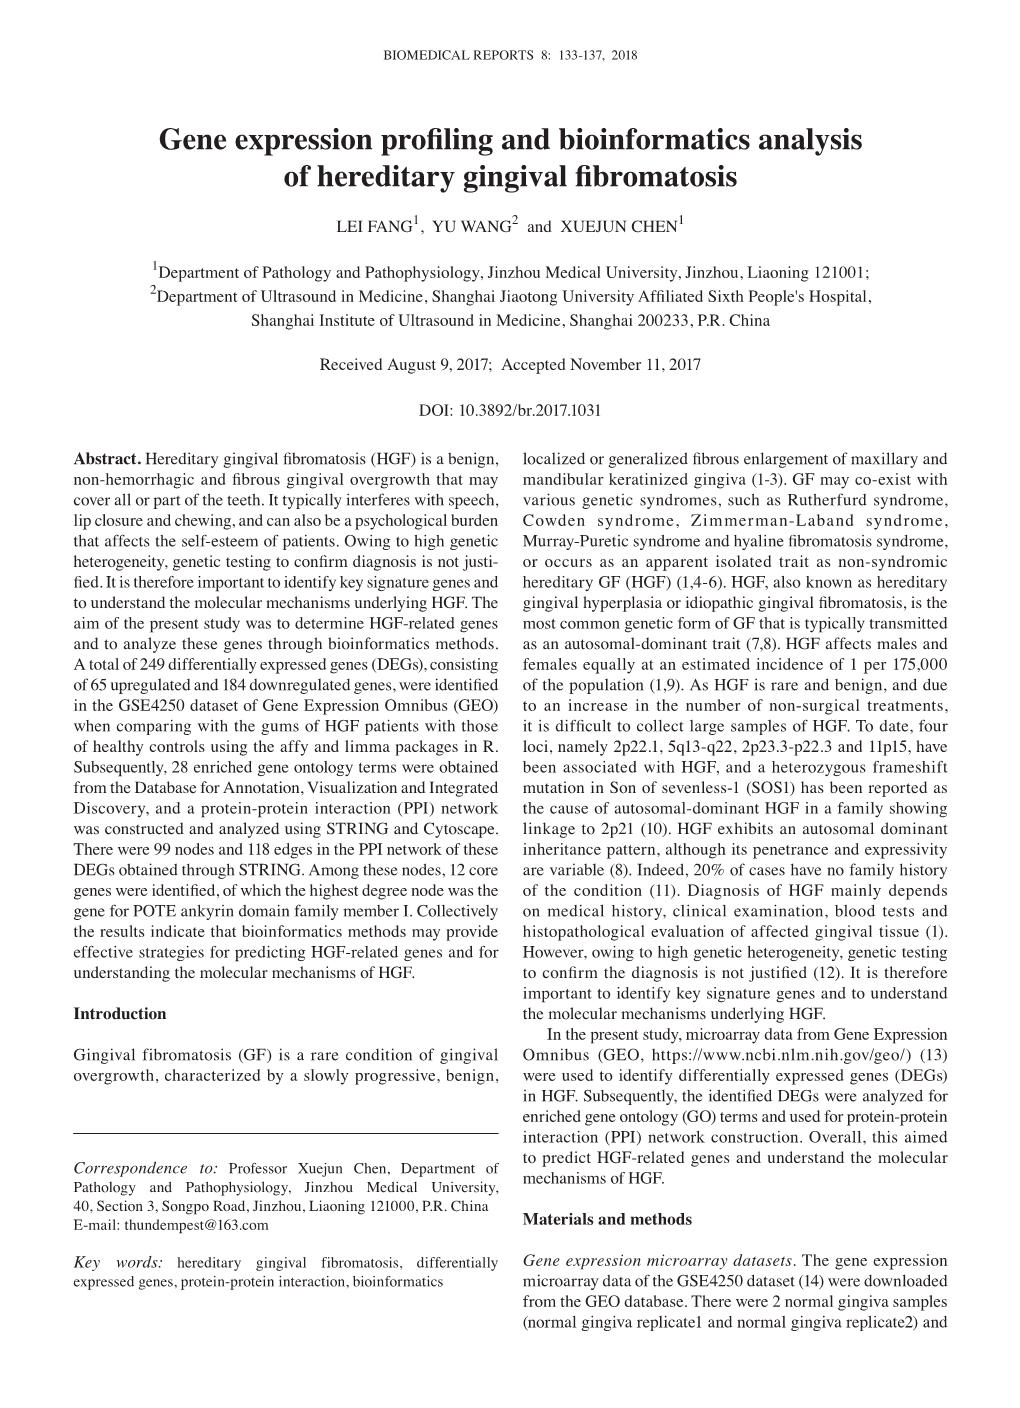 Gene Expression Profiling and Bioinformatics Analysis of Hereditary Gingival Fibromatosis